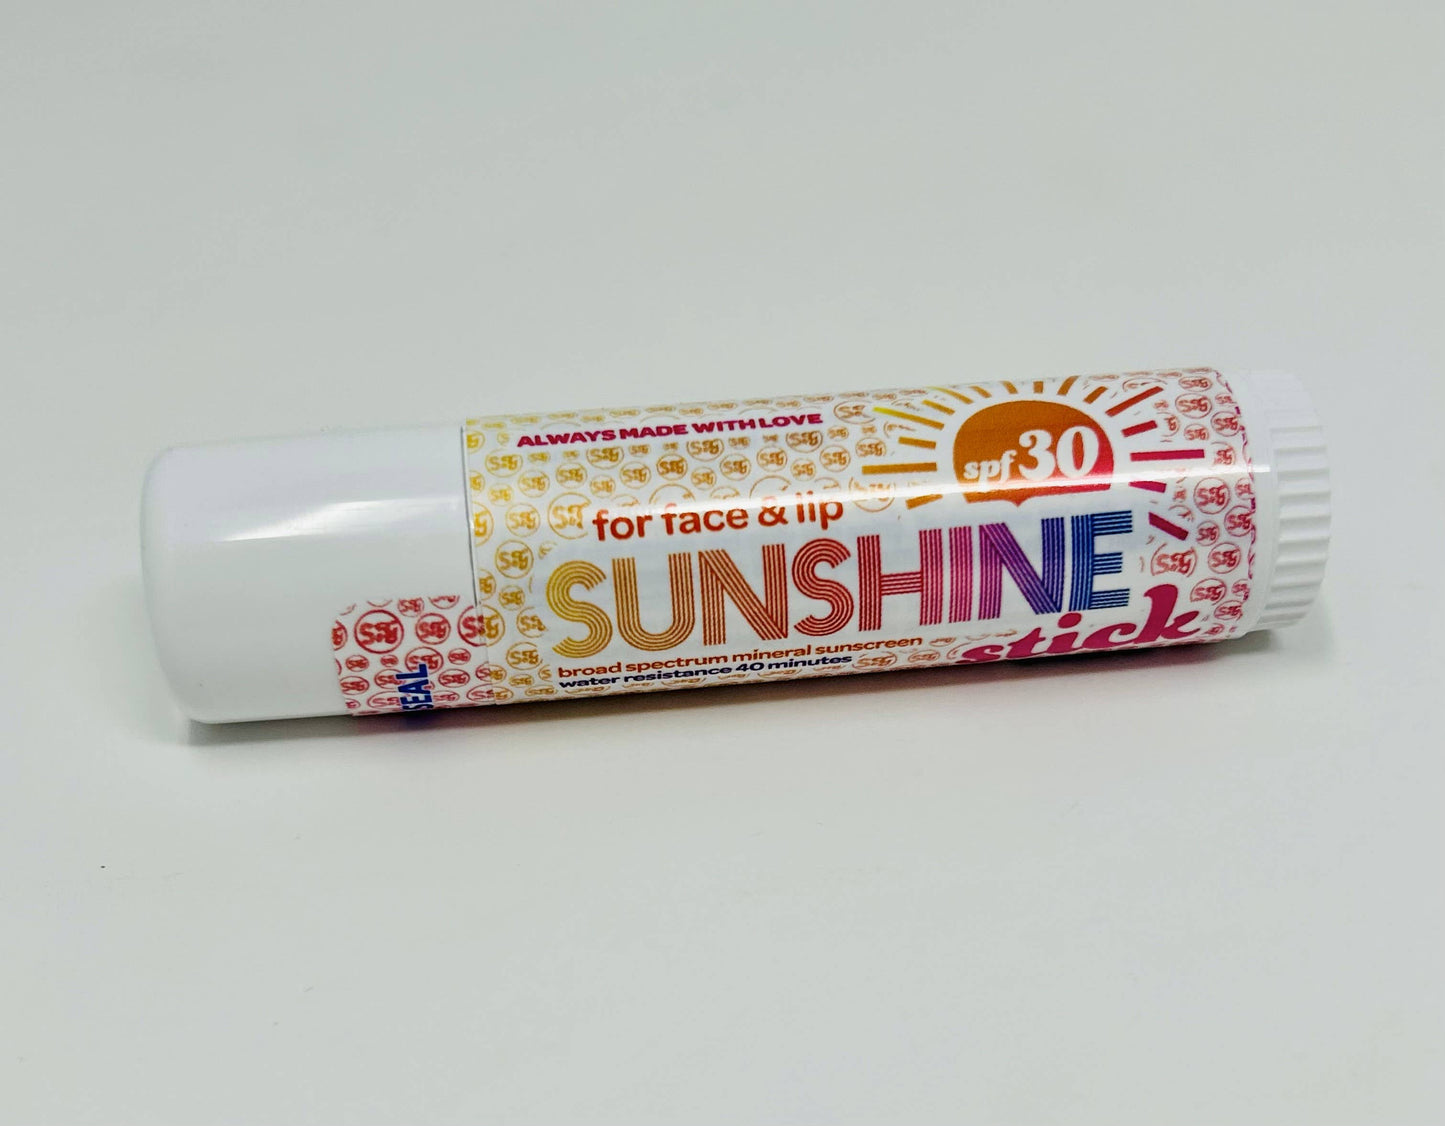 Sunshine & Glitter Sunshine Stick - SPF 30 Natural Zinc